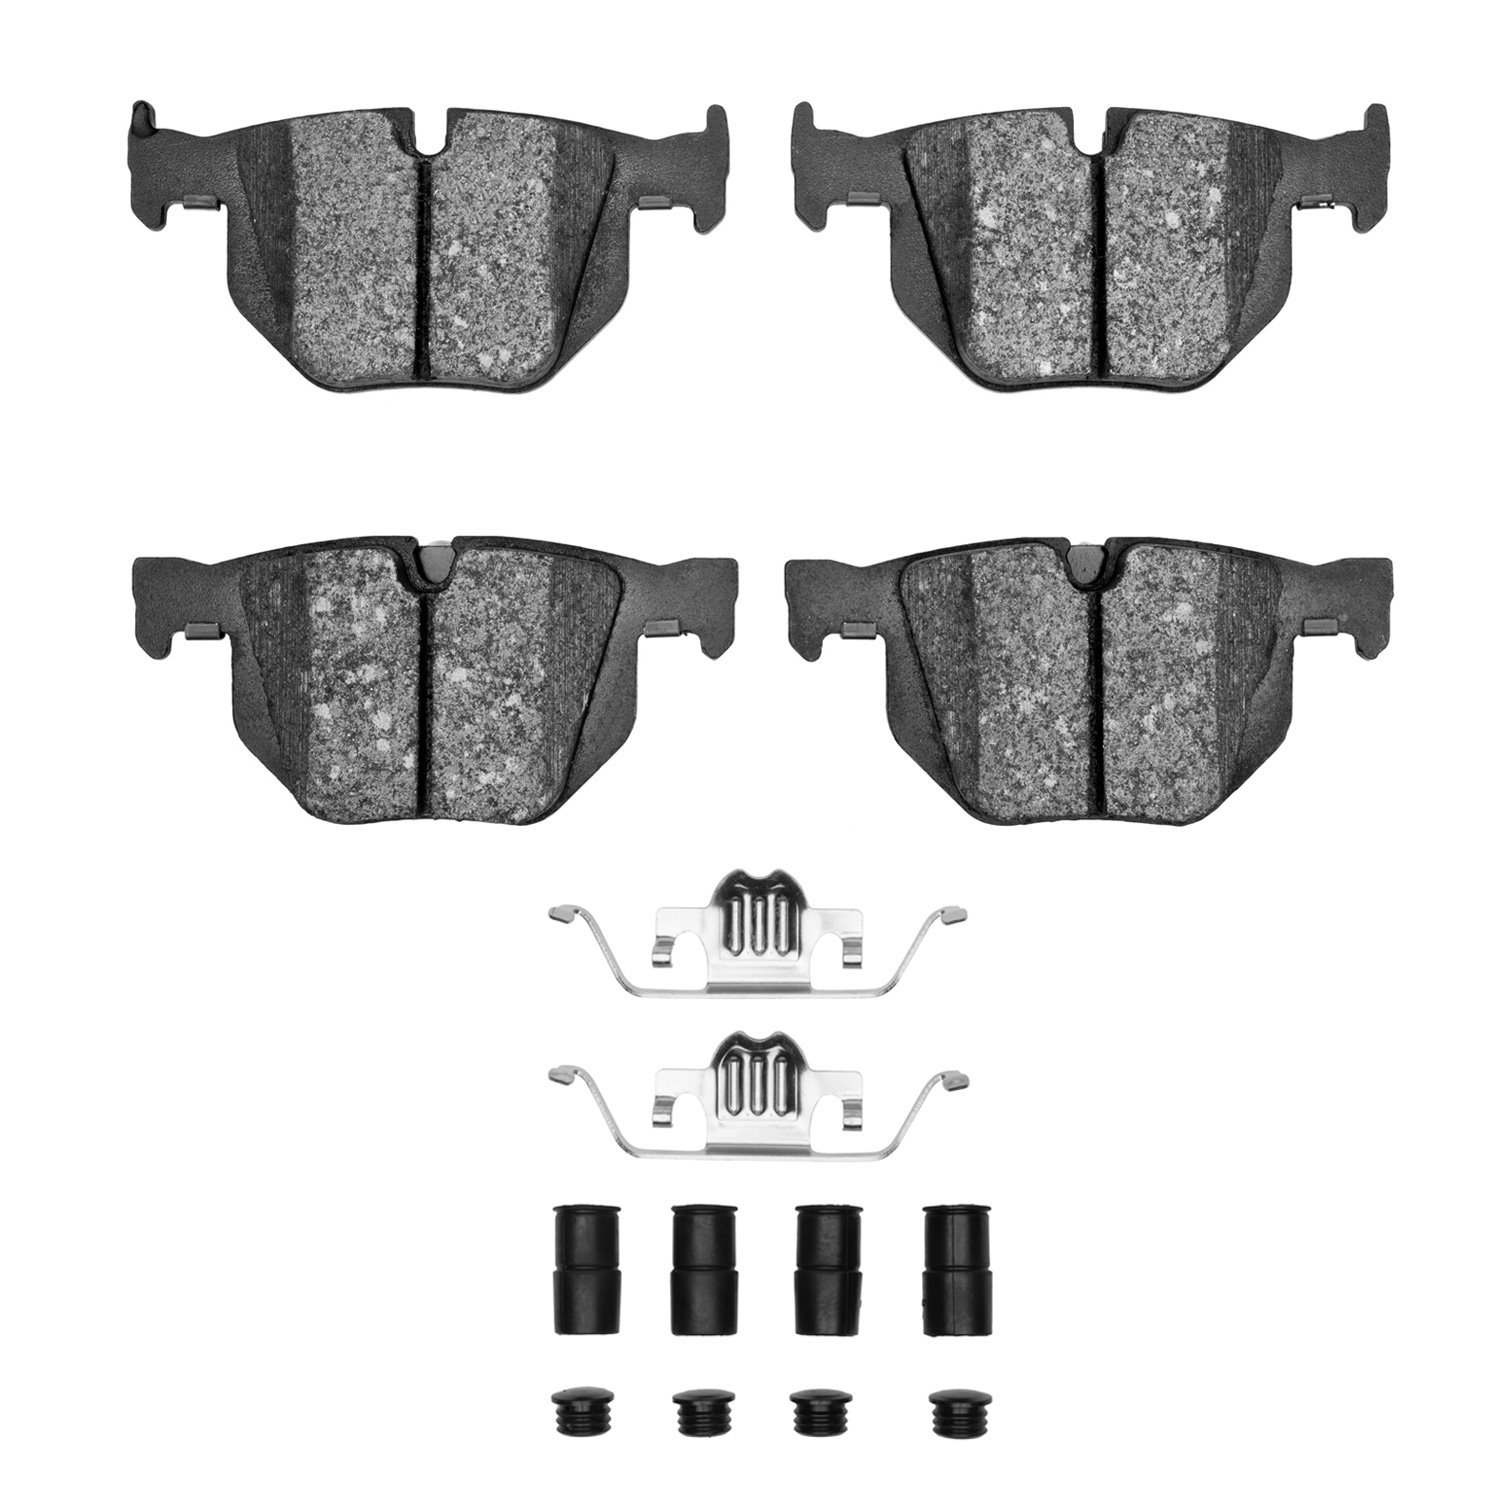 1551-1042-01 5000 Advanced Ceramic Brake Pads & Hardware Kit, 2008-2019 BMW, Position: Rear